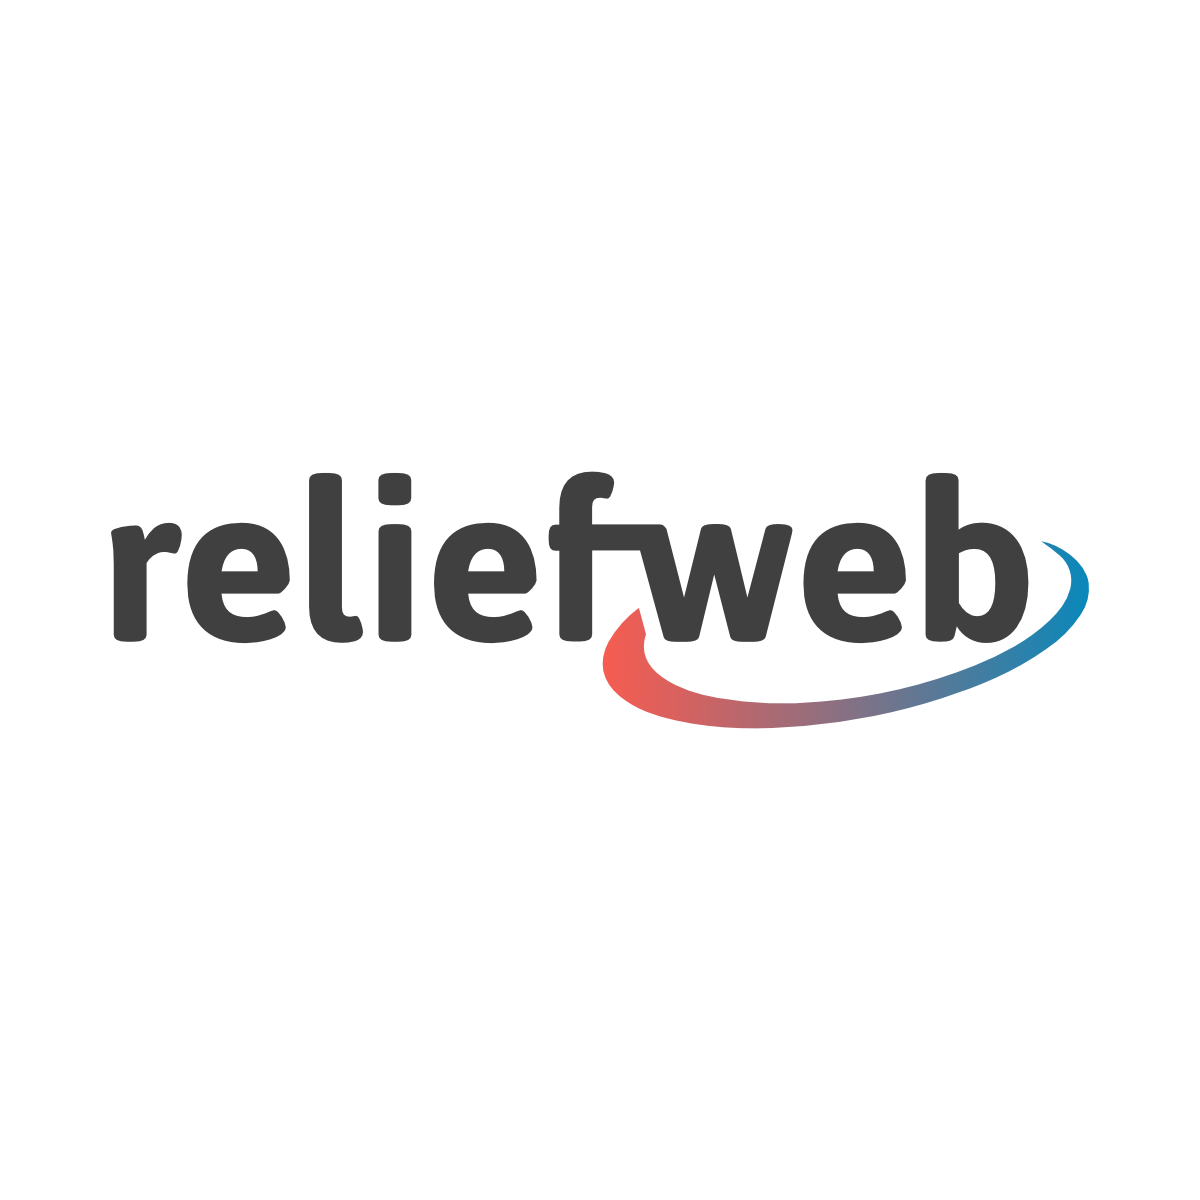 reliefweb company